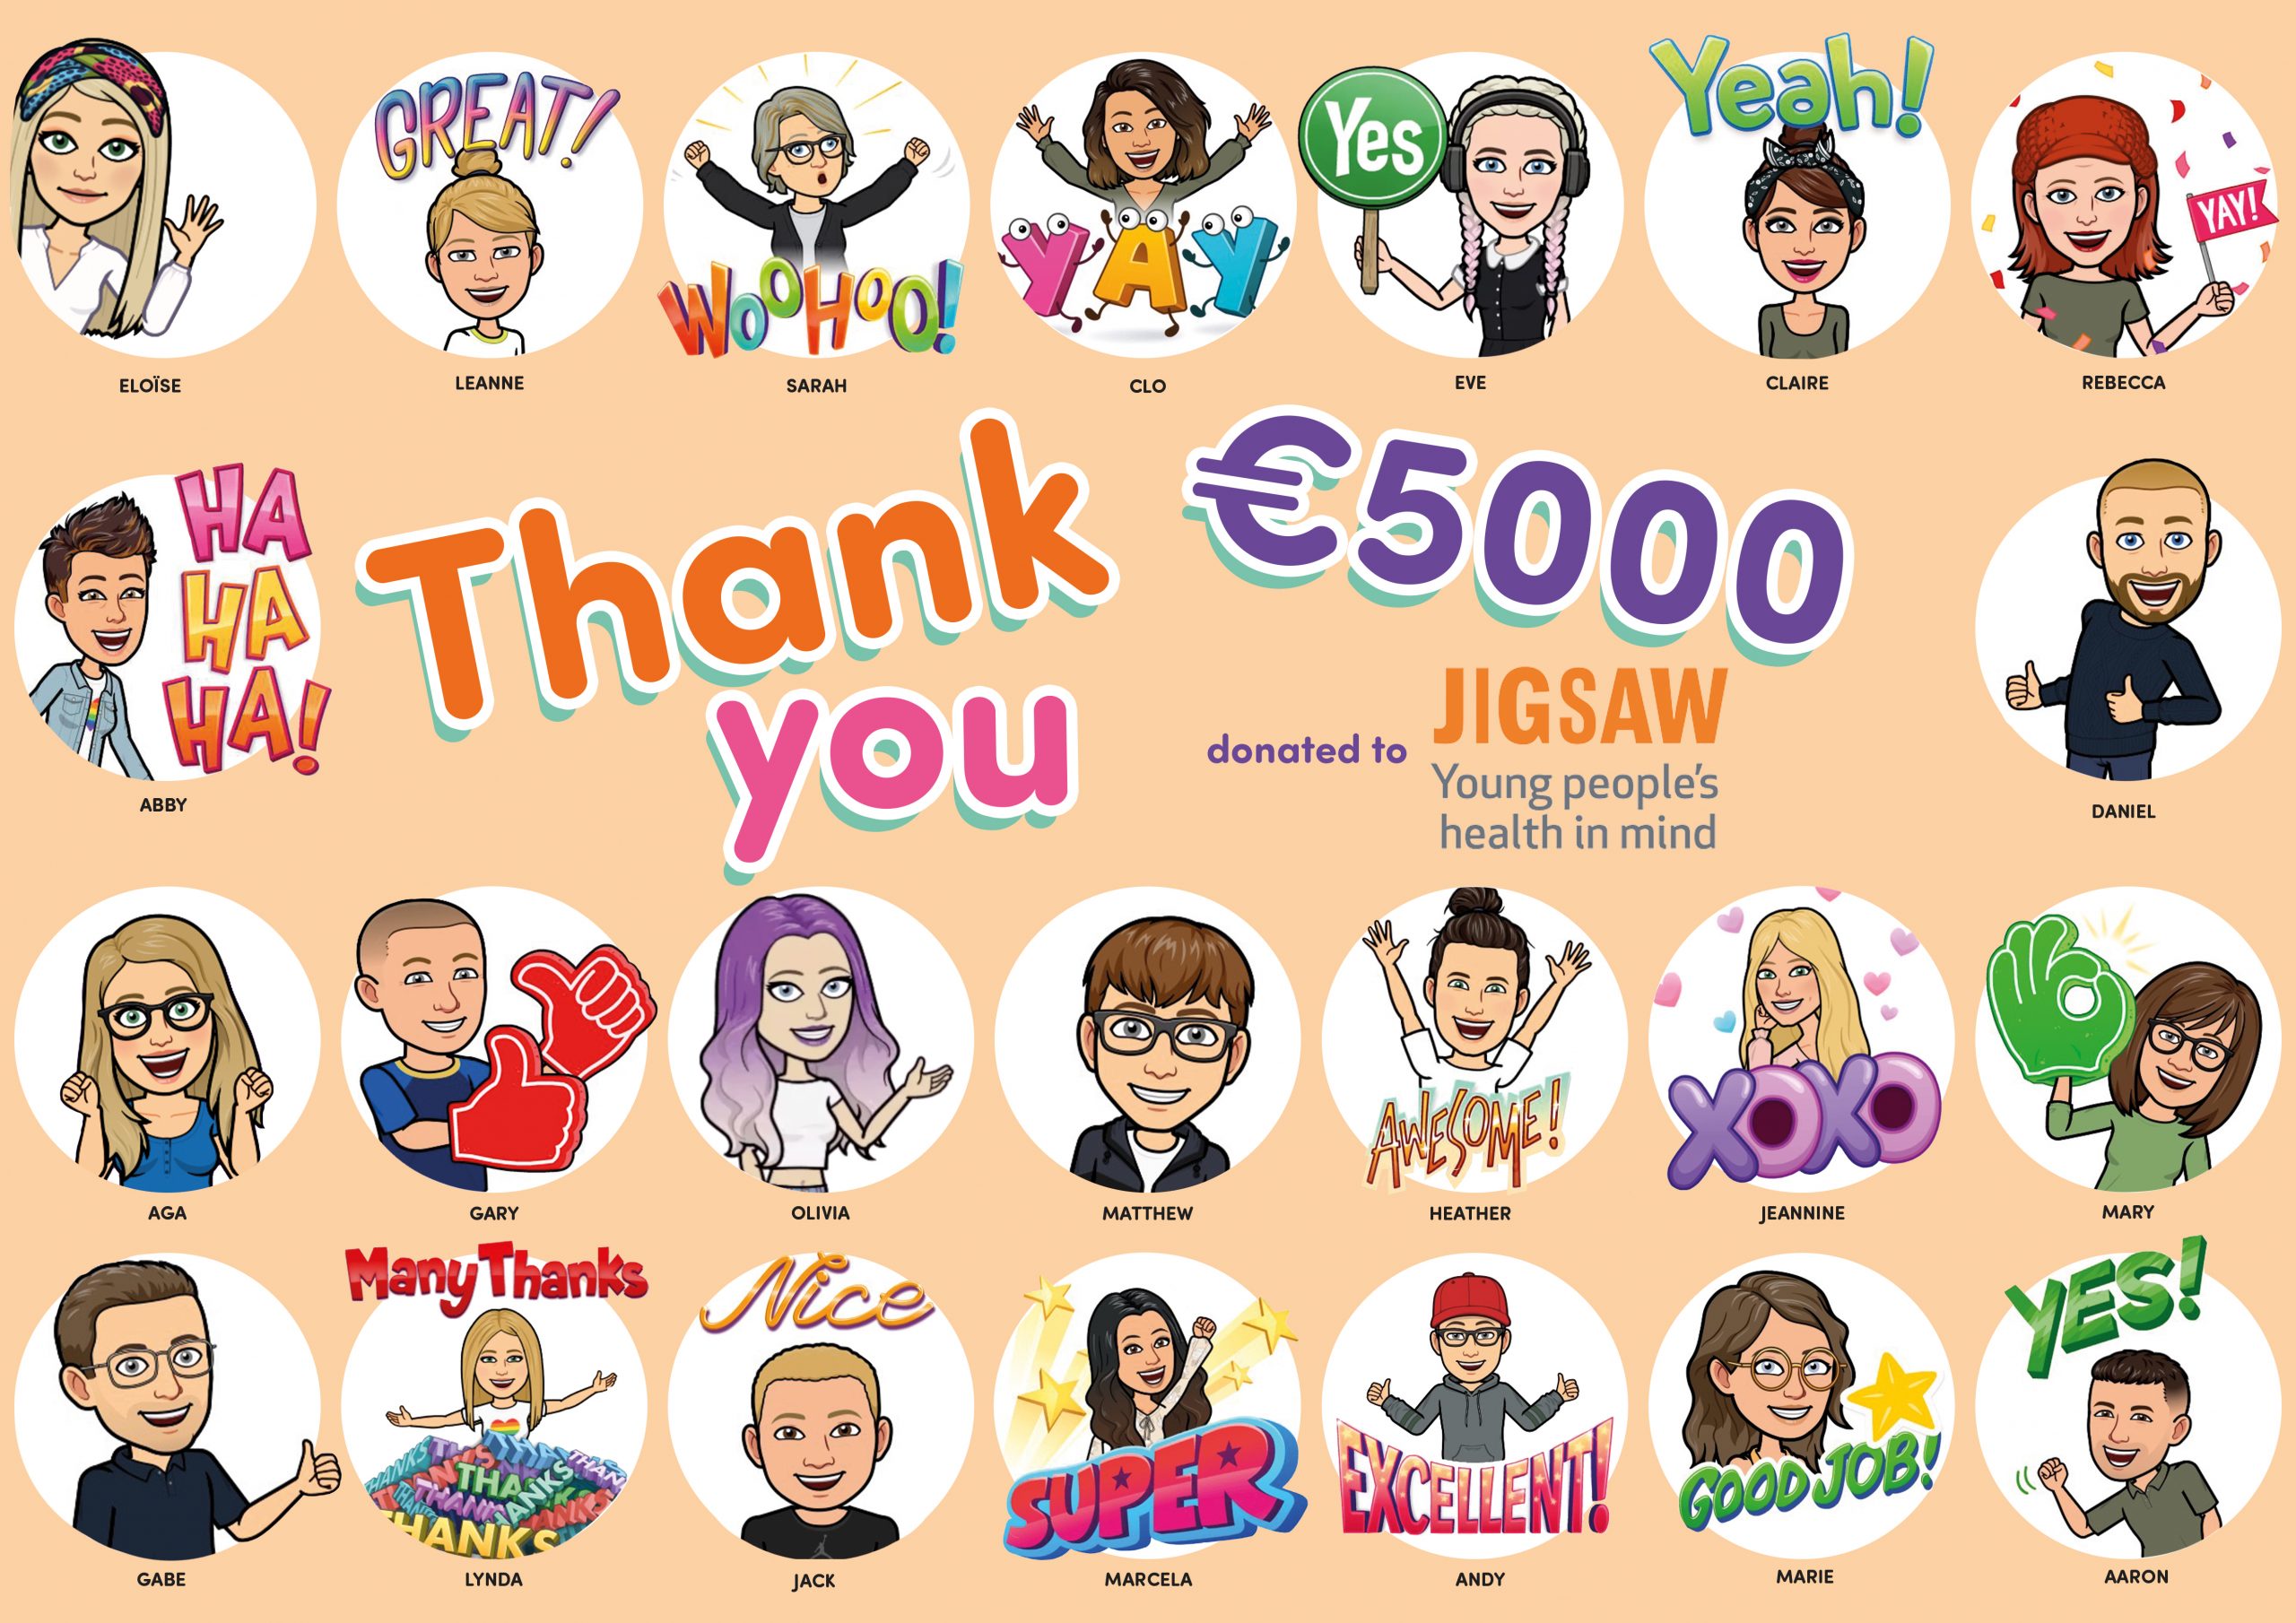 Happythreads donate €5,000 to Jigsaw